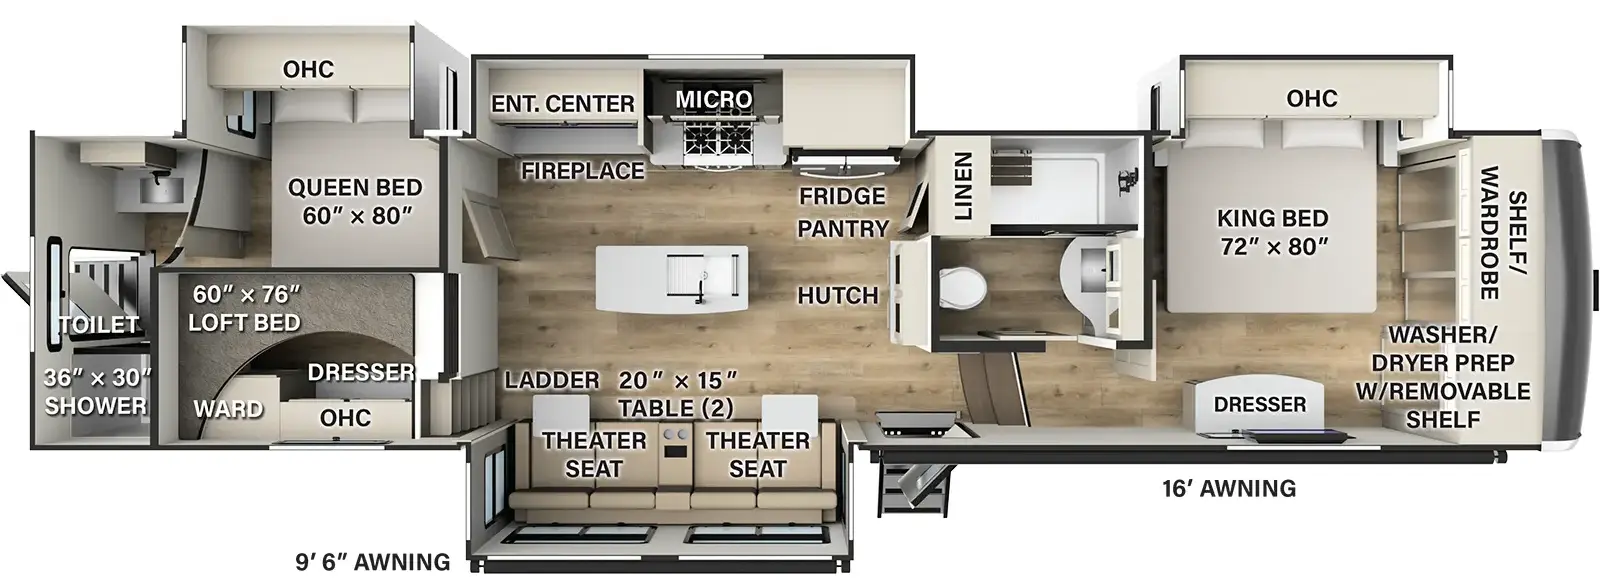 376DS Floorplan Image